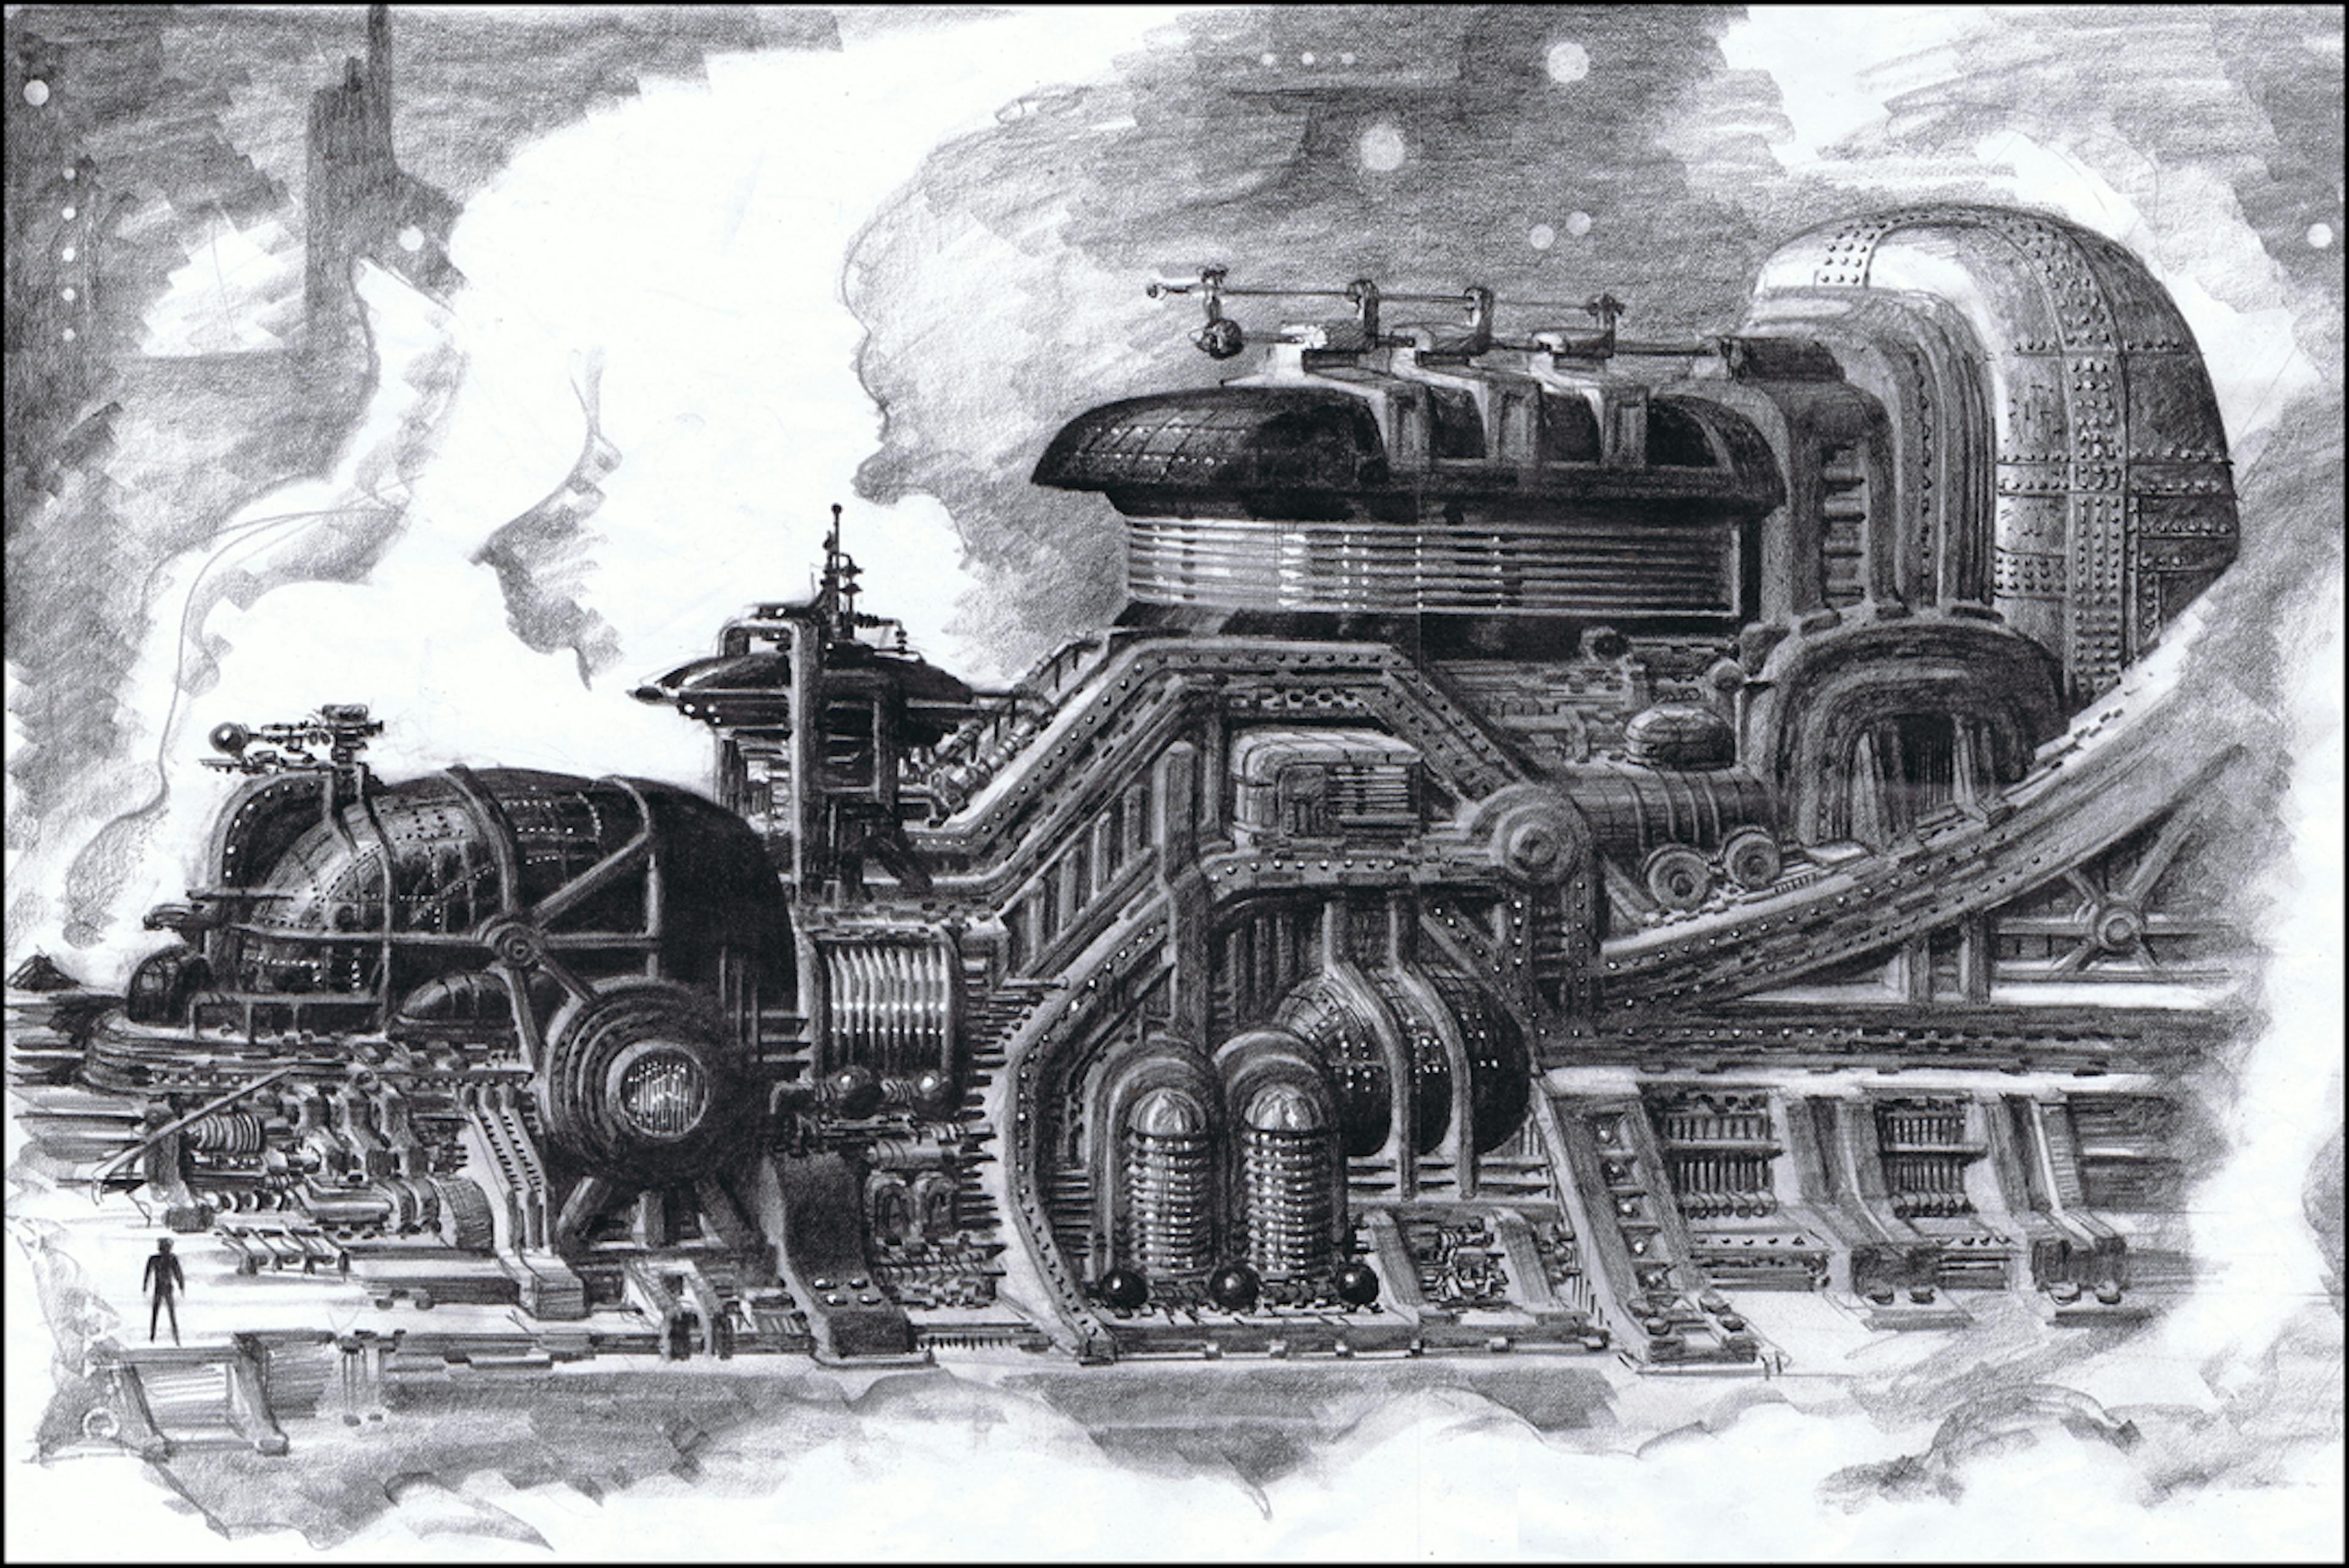 Concept art of a steam engine